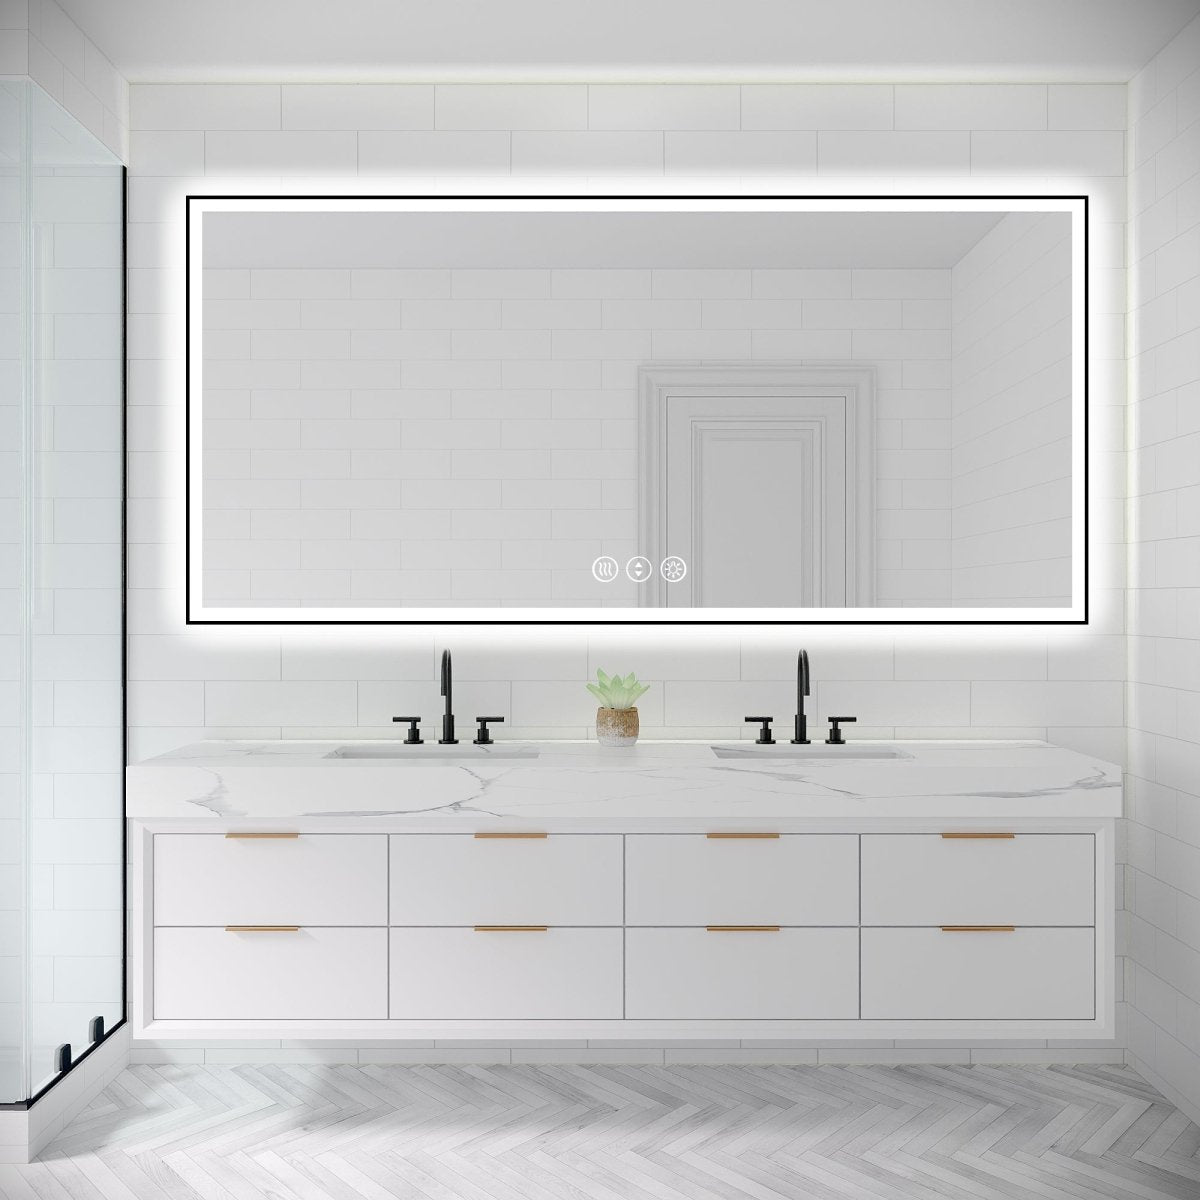 Apex-Noir 84"x40" Framed LED Lighted Bathroom Mirror